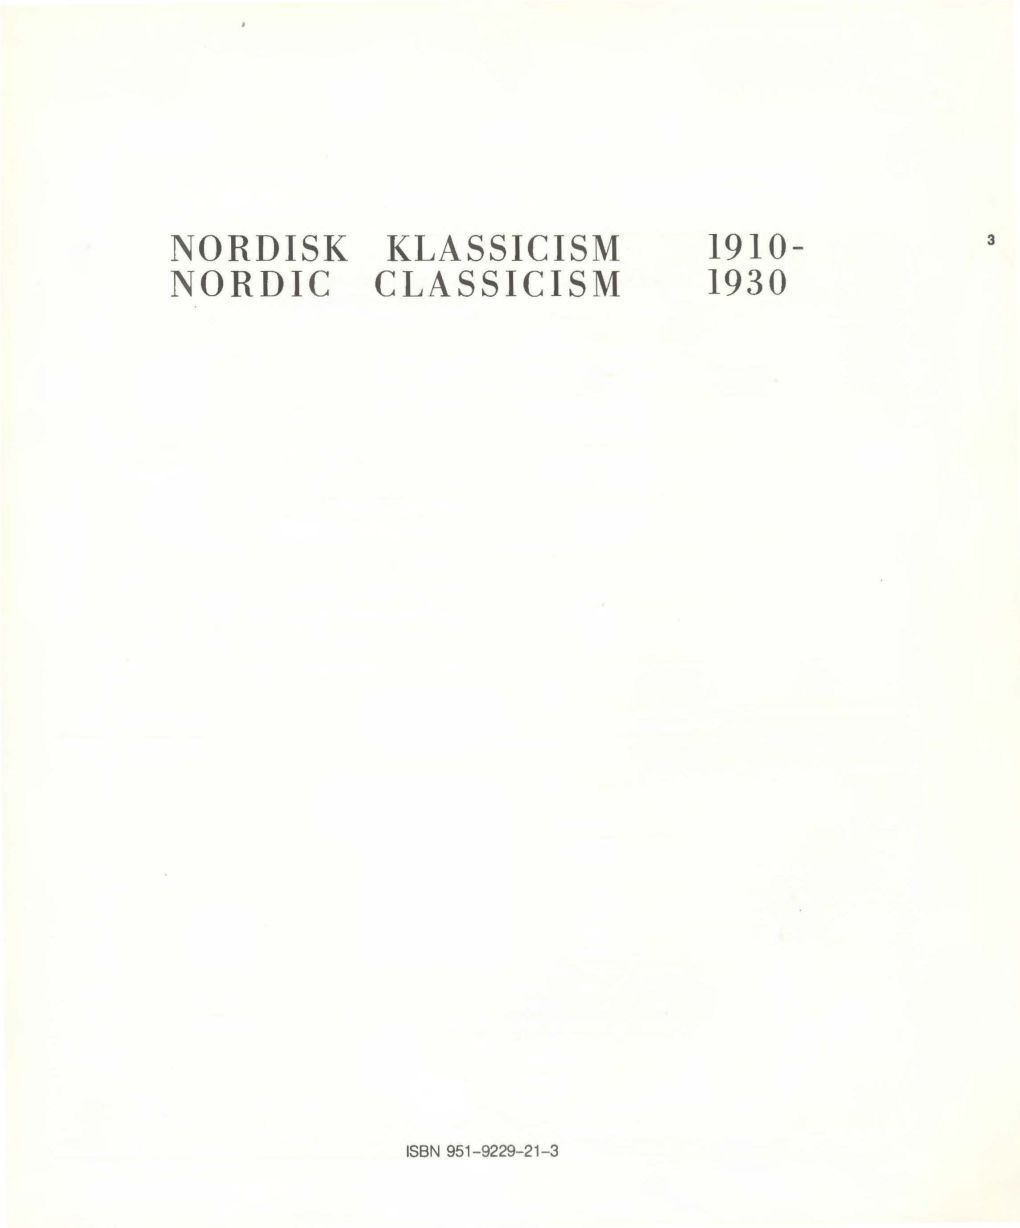 Nordisk Klassicism Nordic Classicism